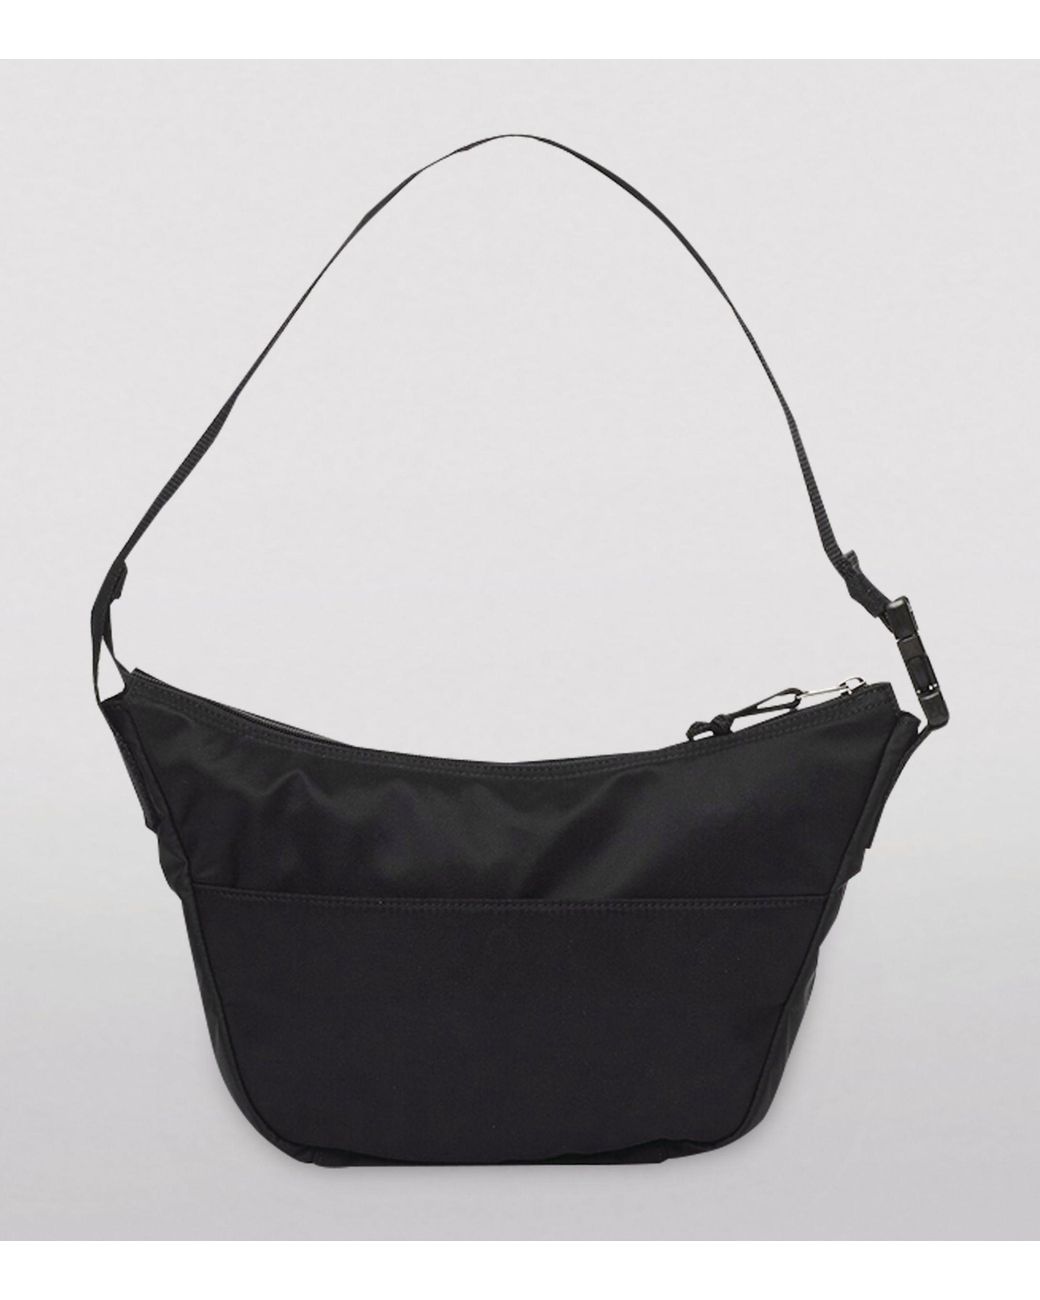 Balenciaga Women's Black Wheel Sling Bag